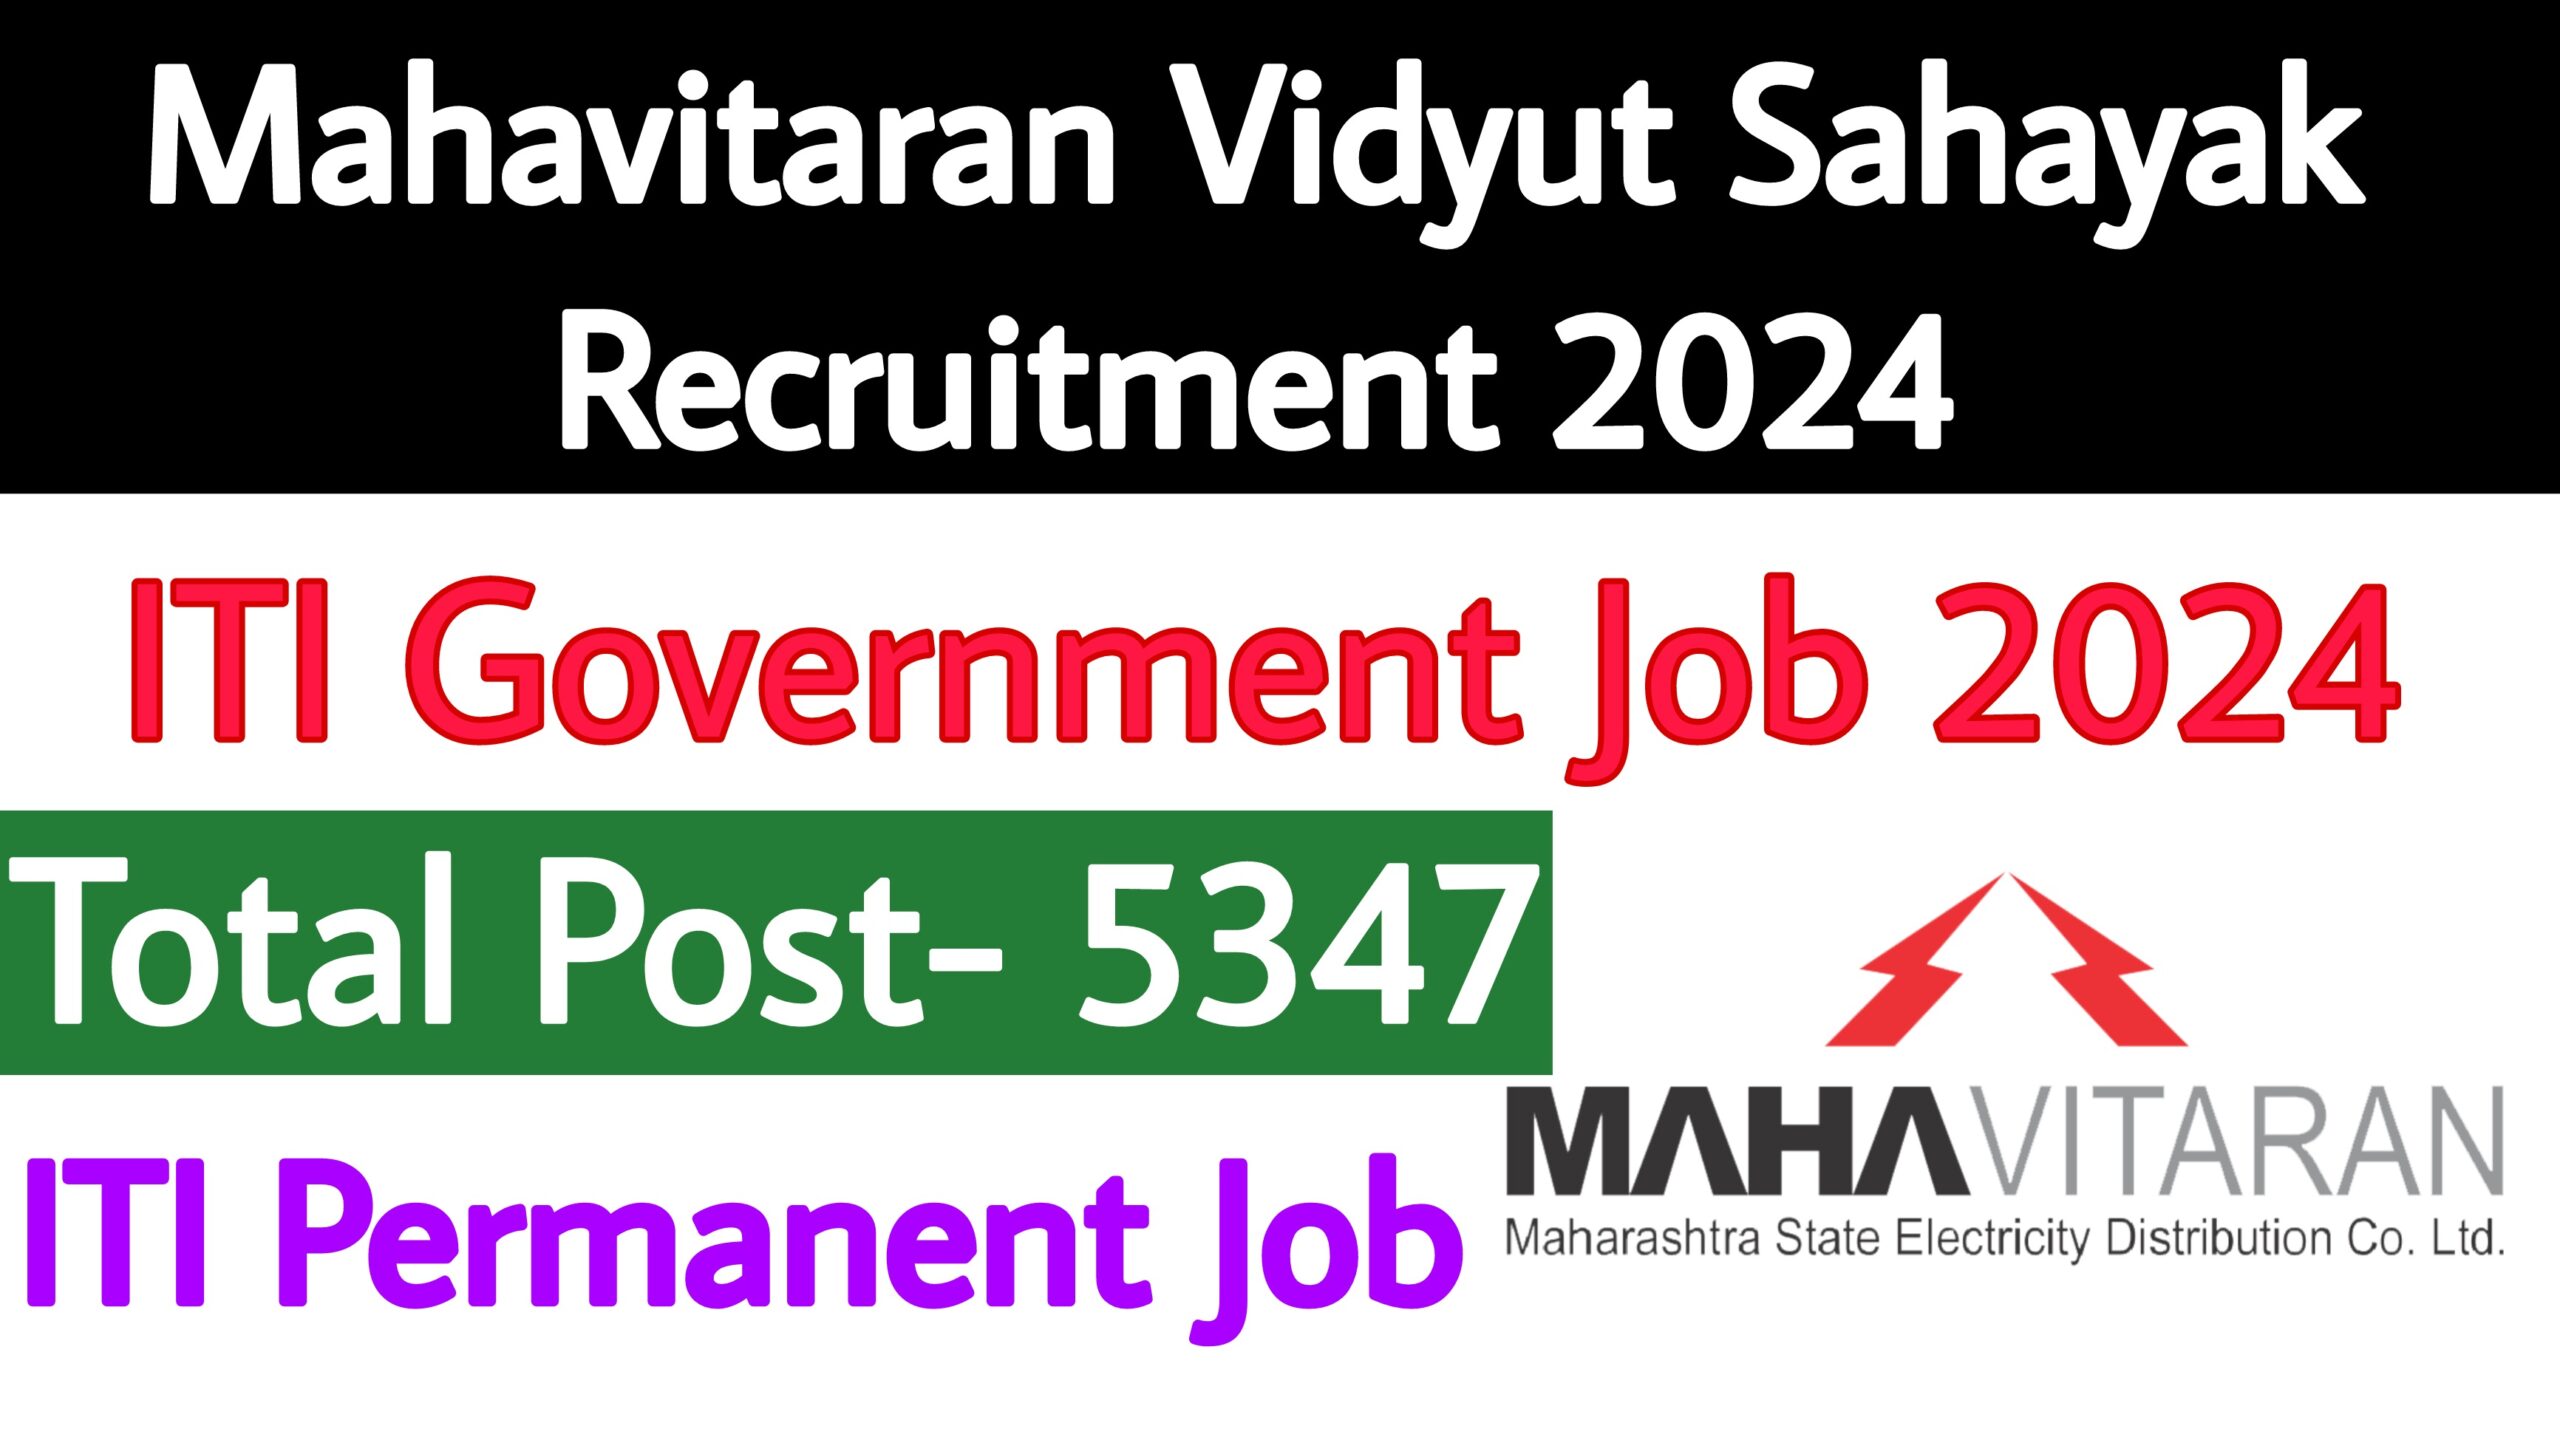 Mahadiscom Recruitment Vidyut Sahayak 2024 | Last Date Extended Vidyut Sahayak Posts | Apply Online